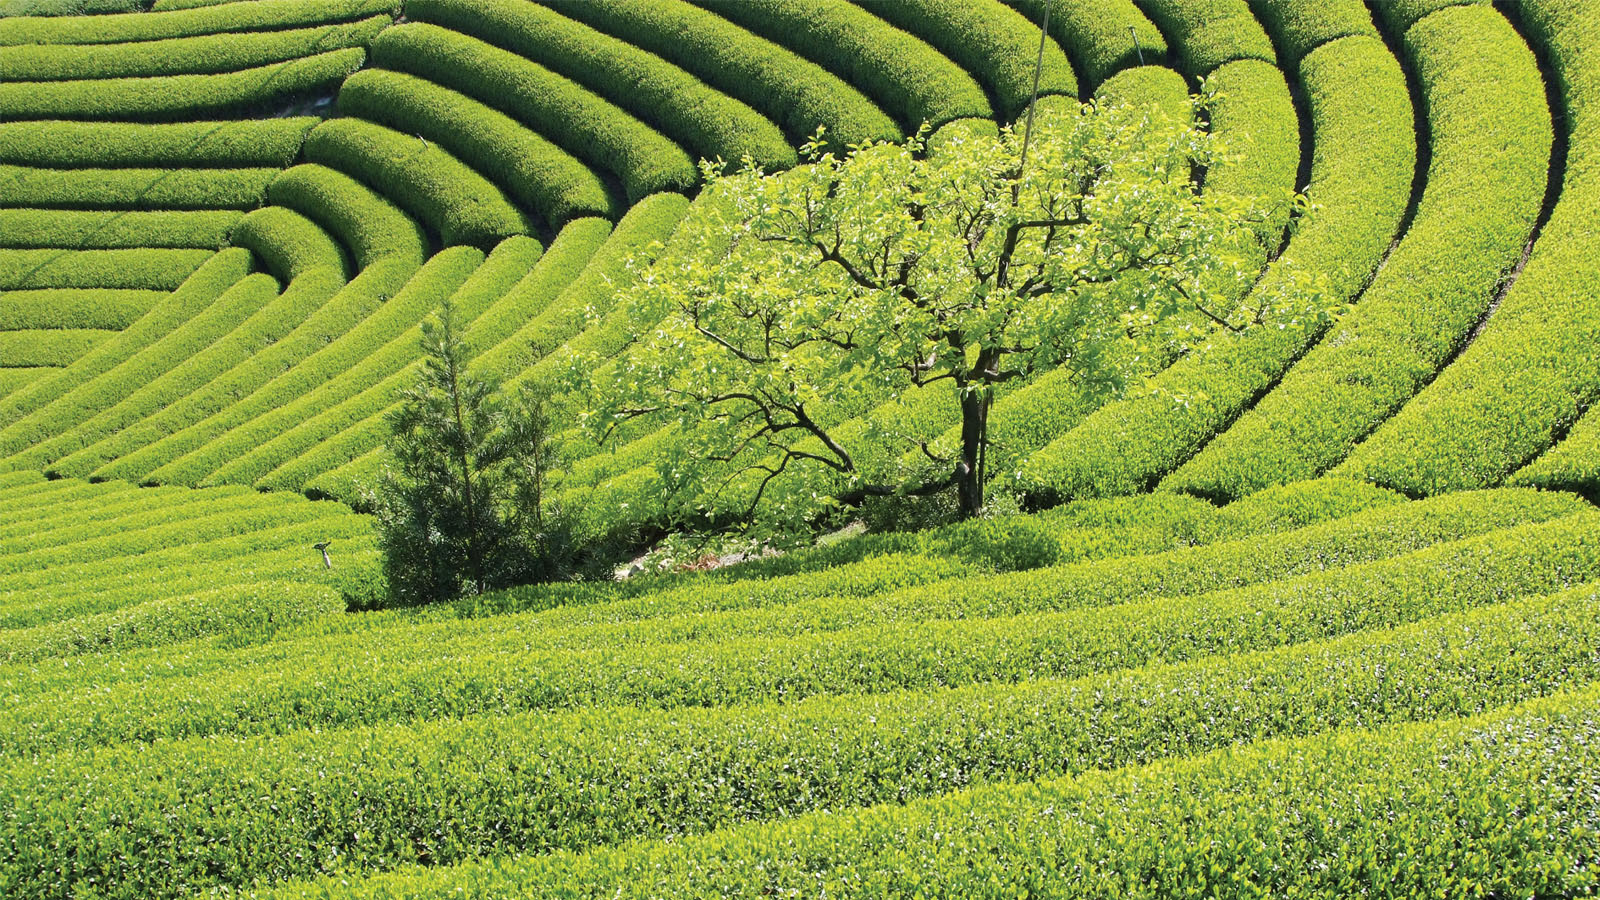 Matcha & Beyond - Matcha Tea Fields